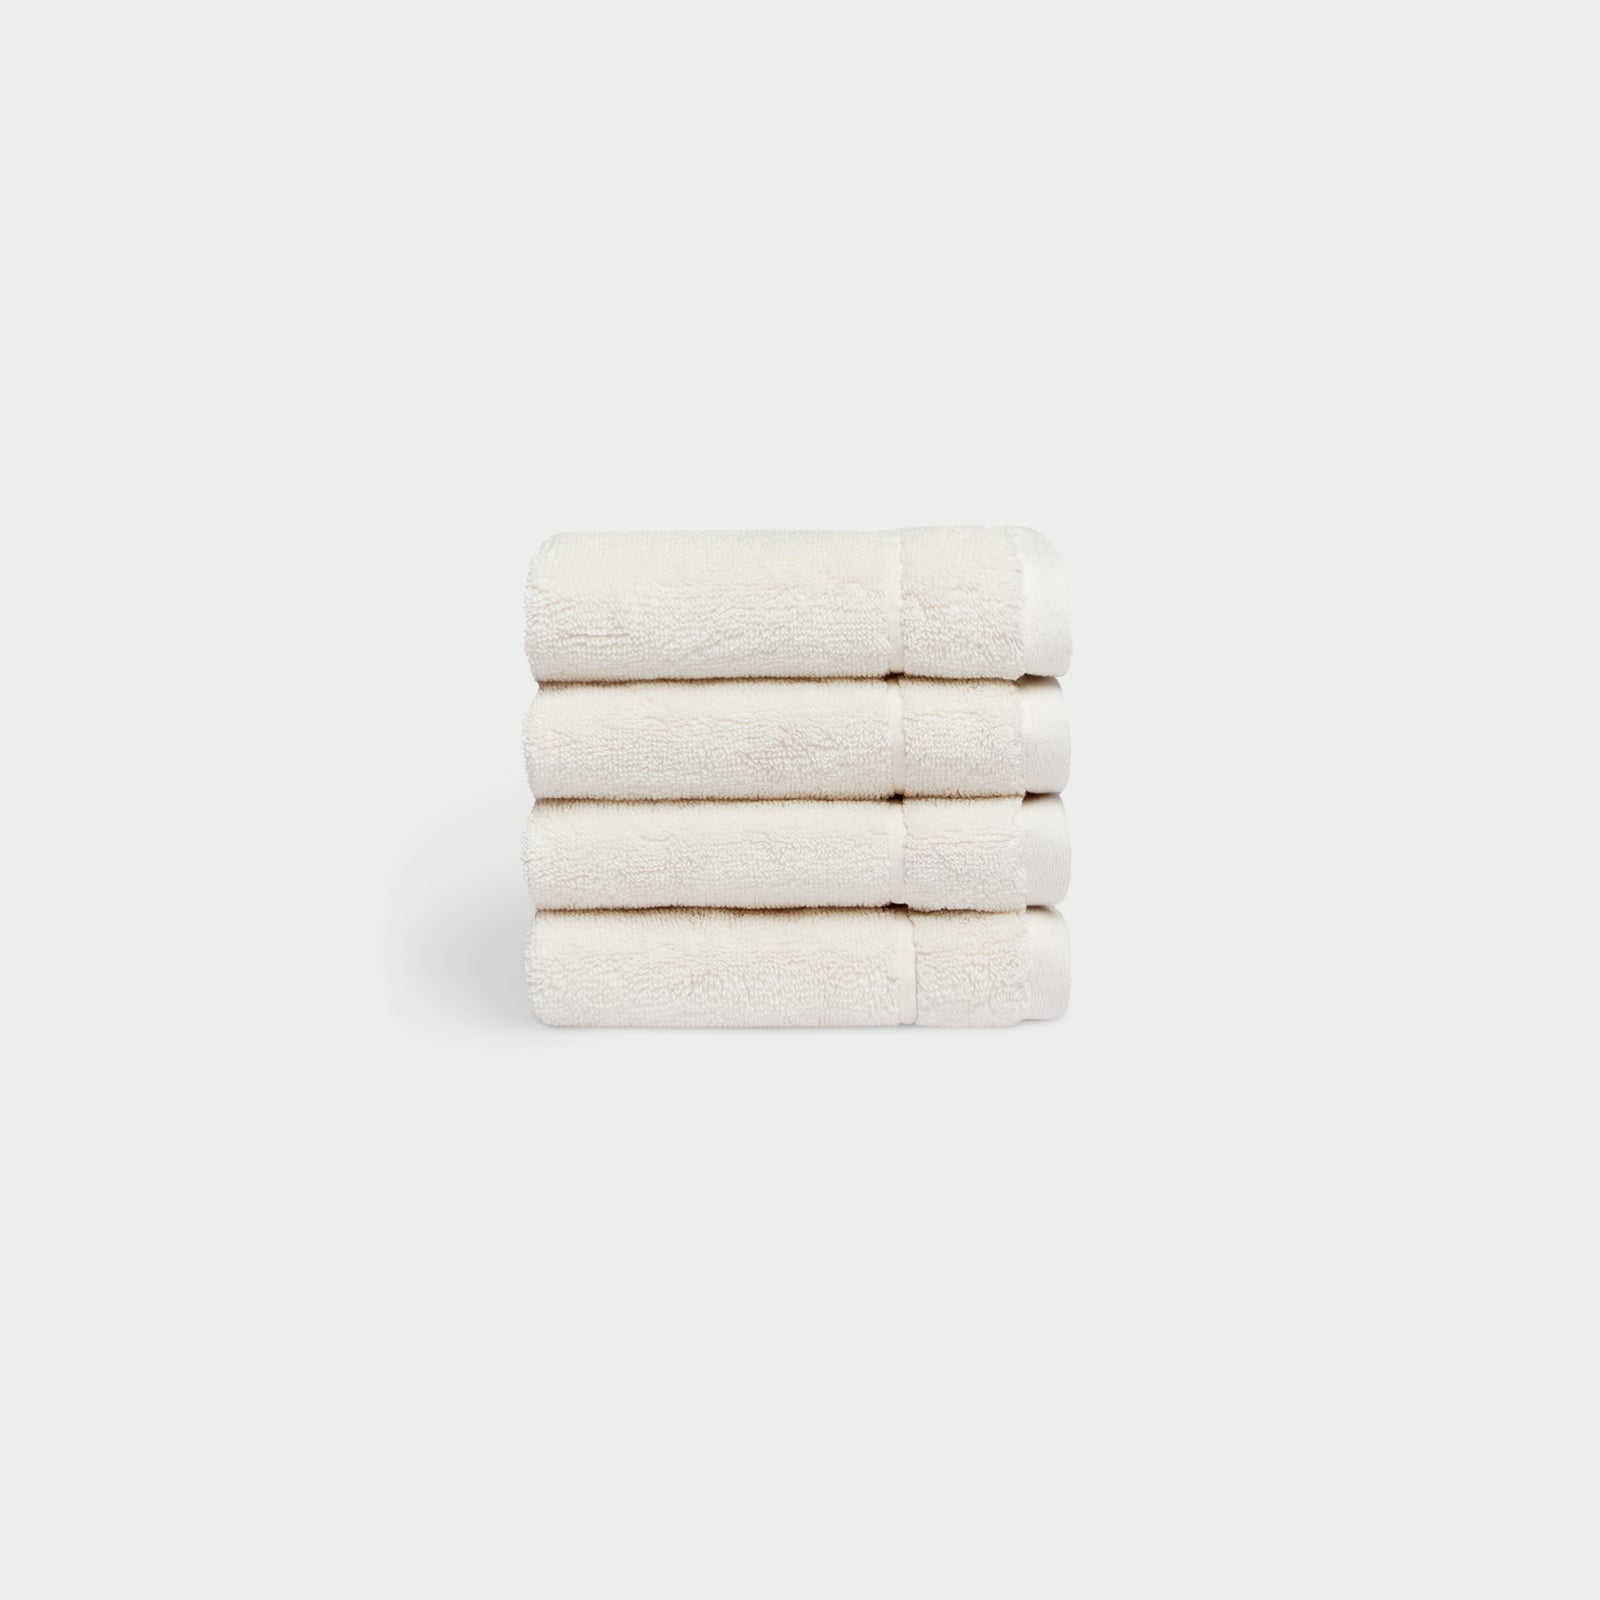 Seashell Premium Plush Wash Cloths. Photo of Premium Plush Wash Cloths taken with white background 